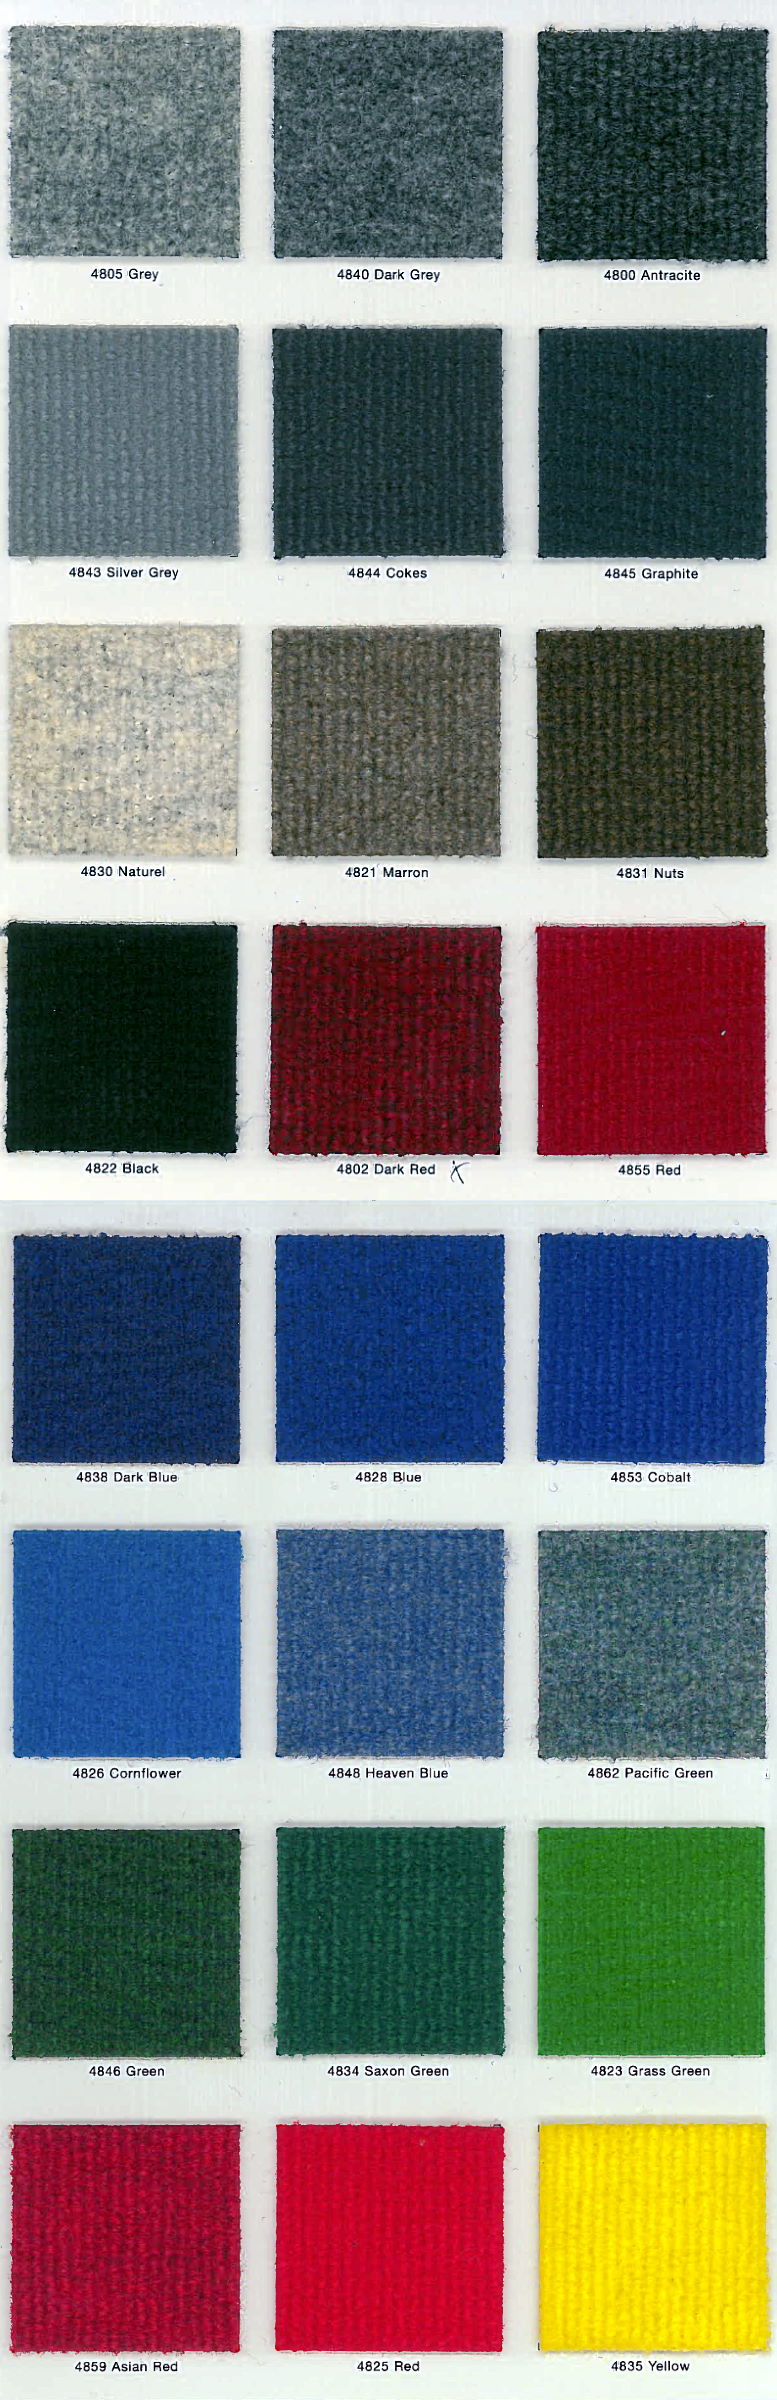 185-670xx Carpets